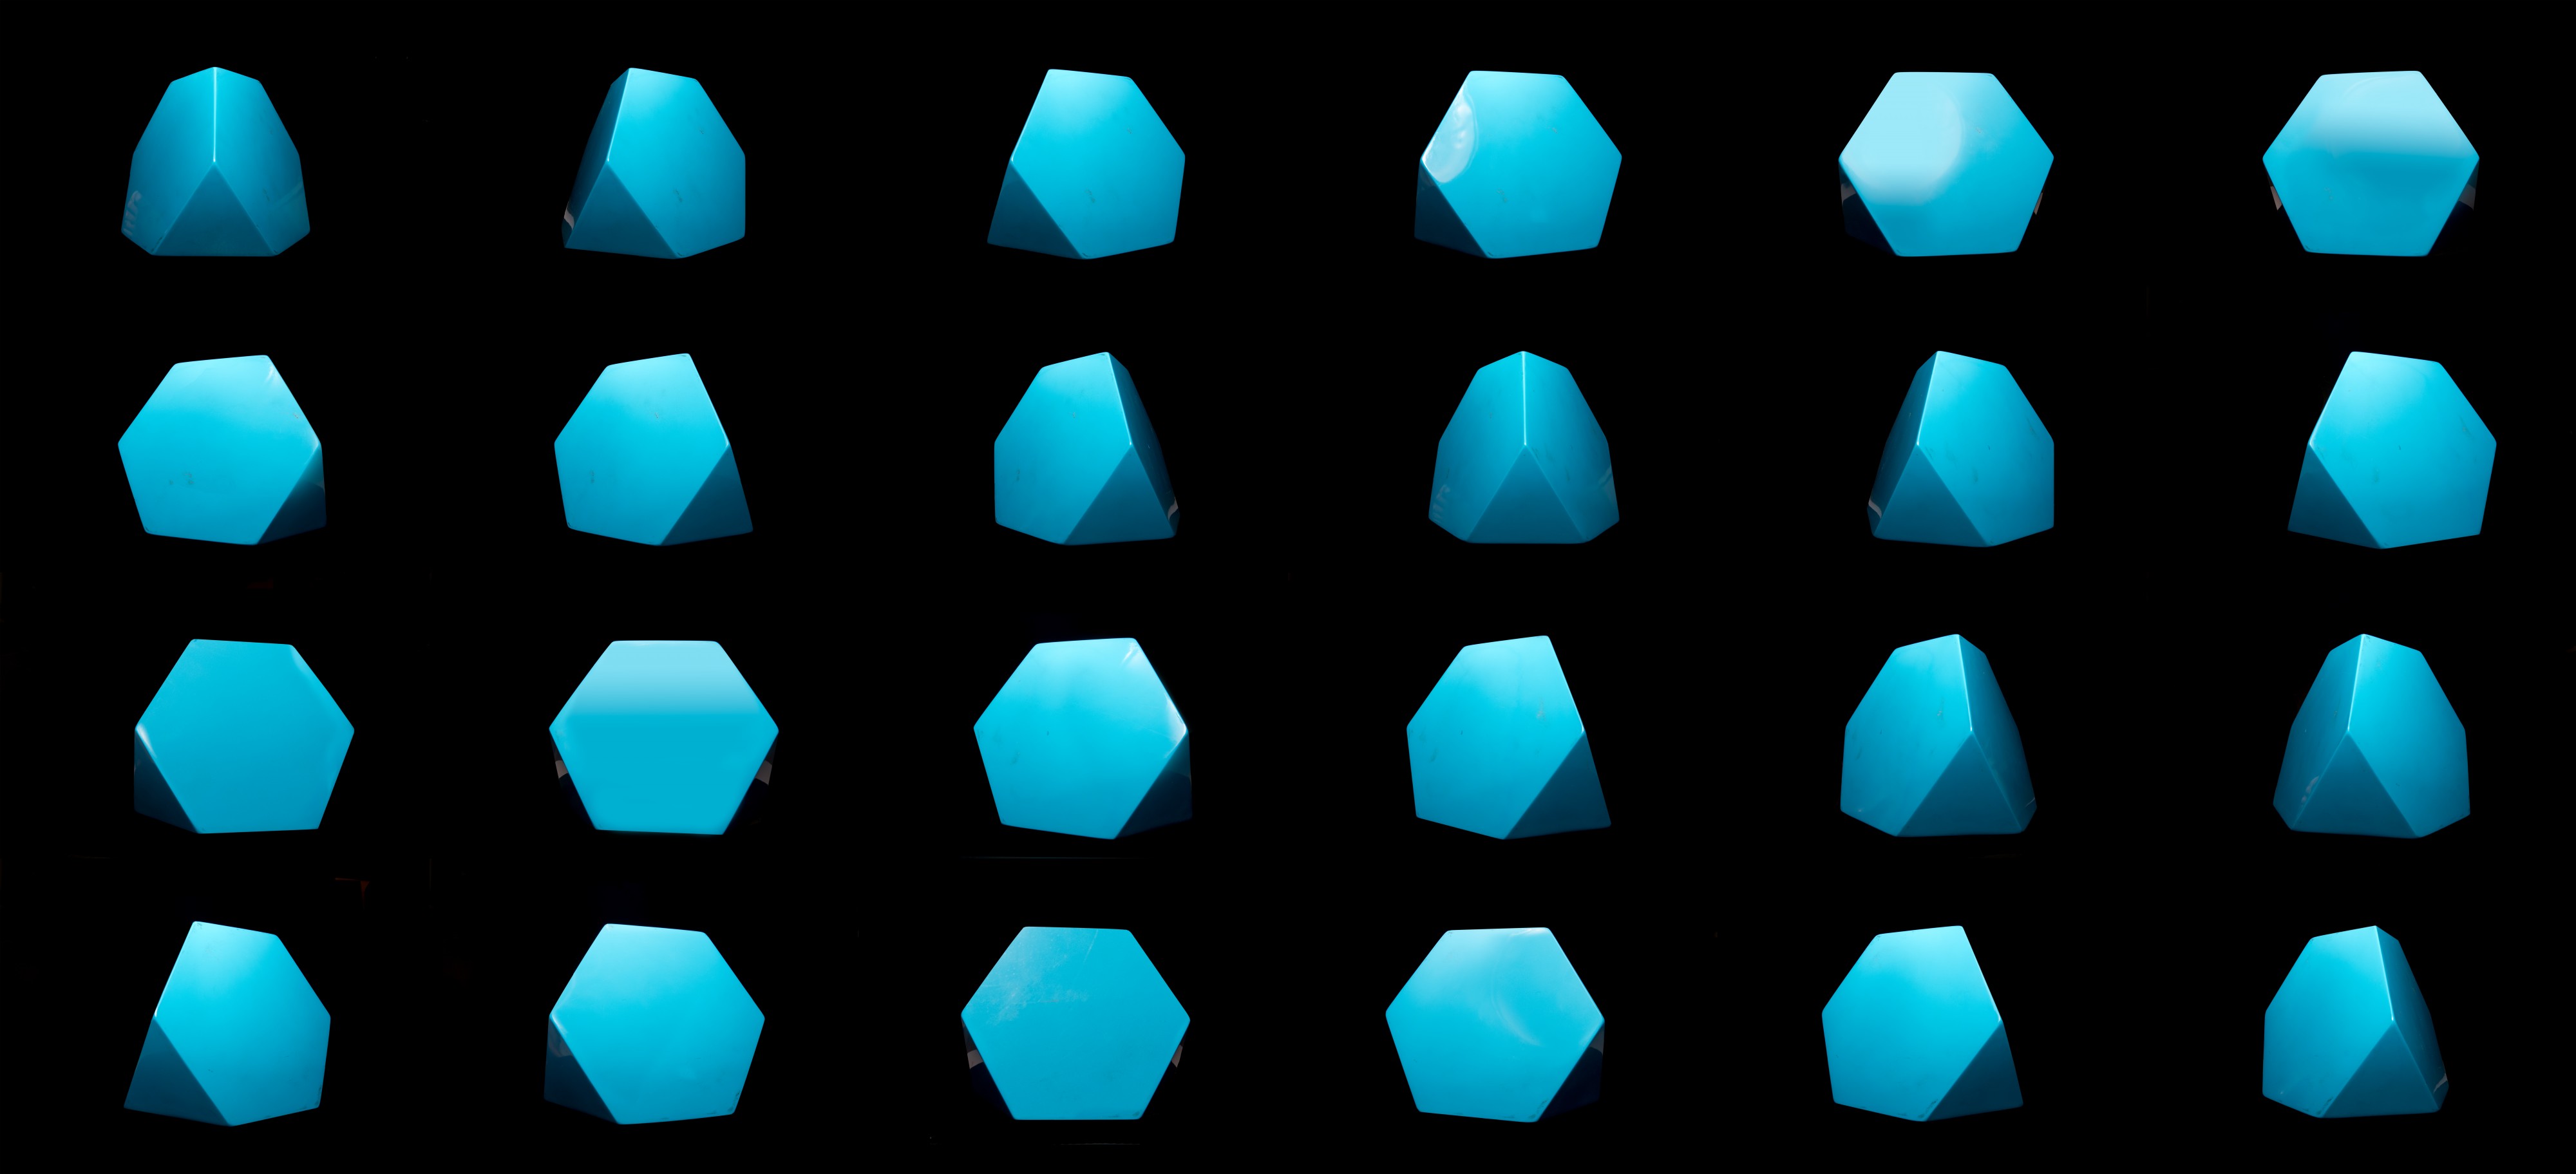 Tetraedro truncado (Matemateca IME-USP)